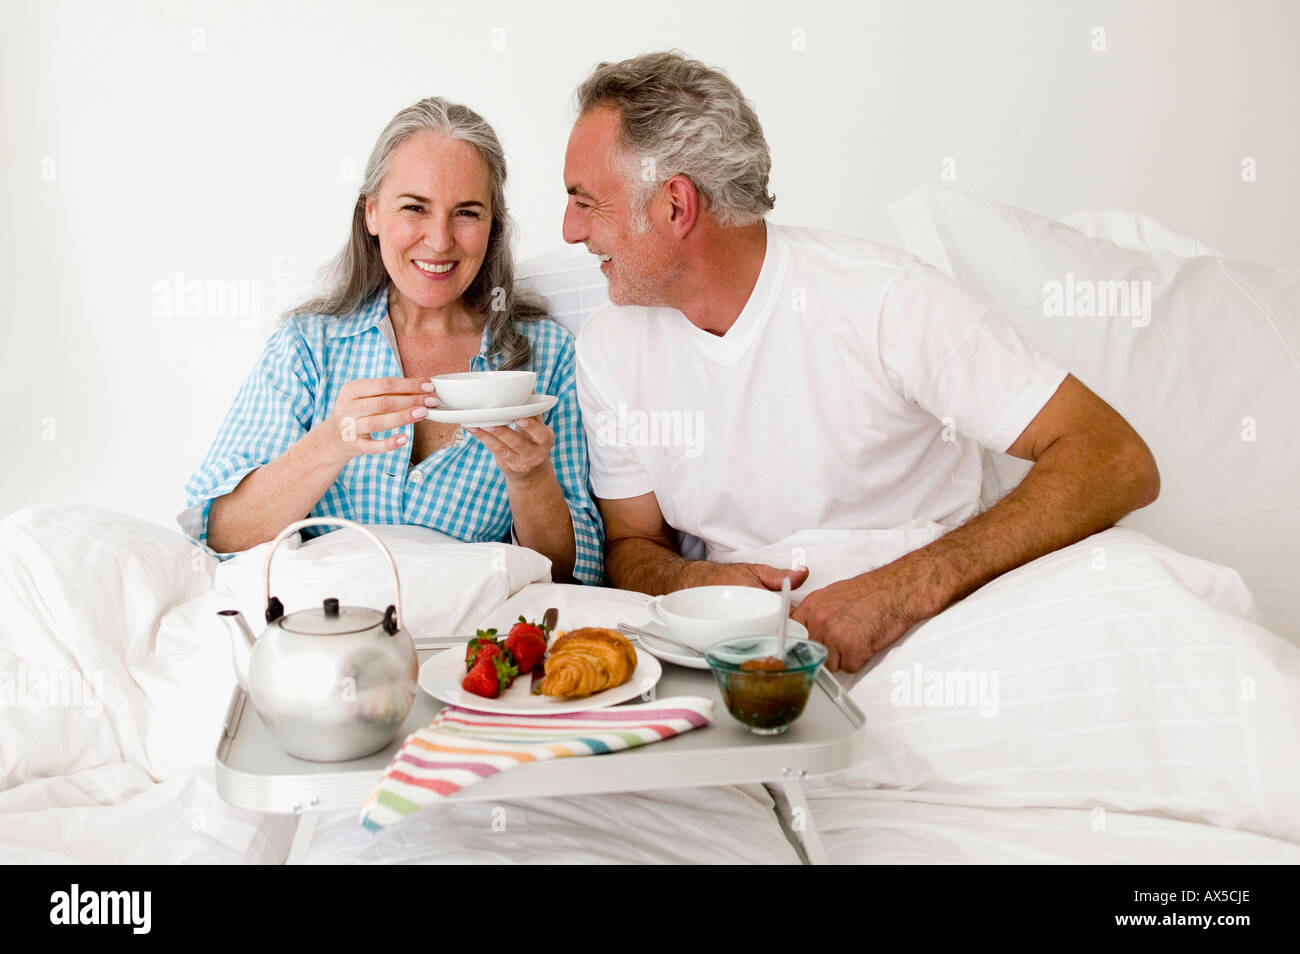 Älteres Paar sitzt auf dem Bett mit Frühstück, Lächeln Stockfoto